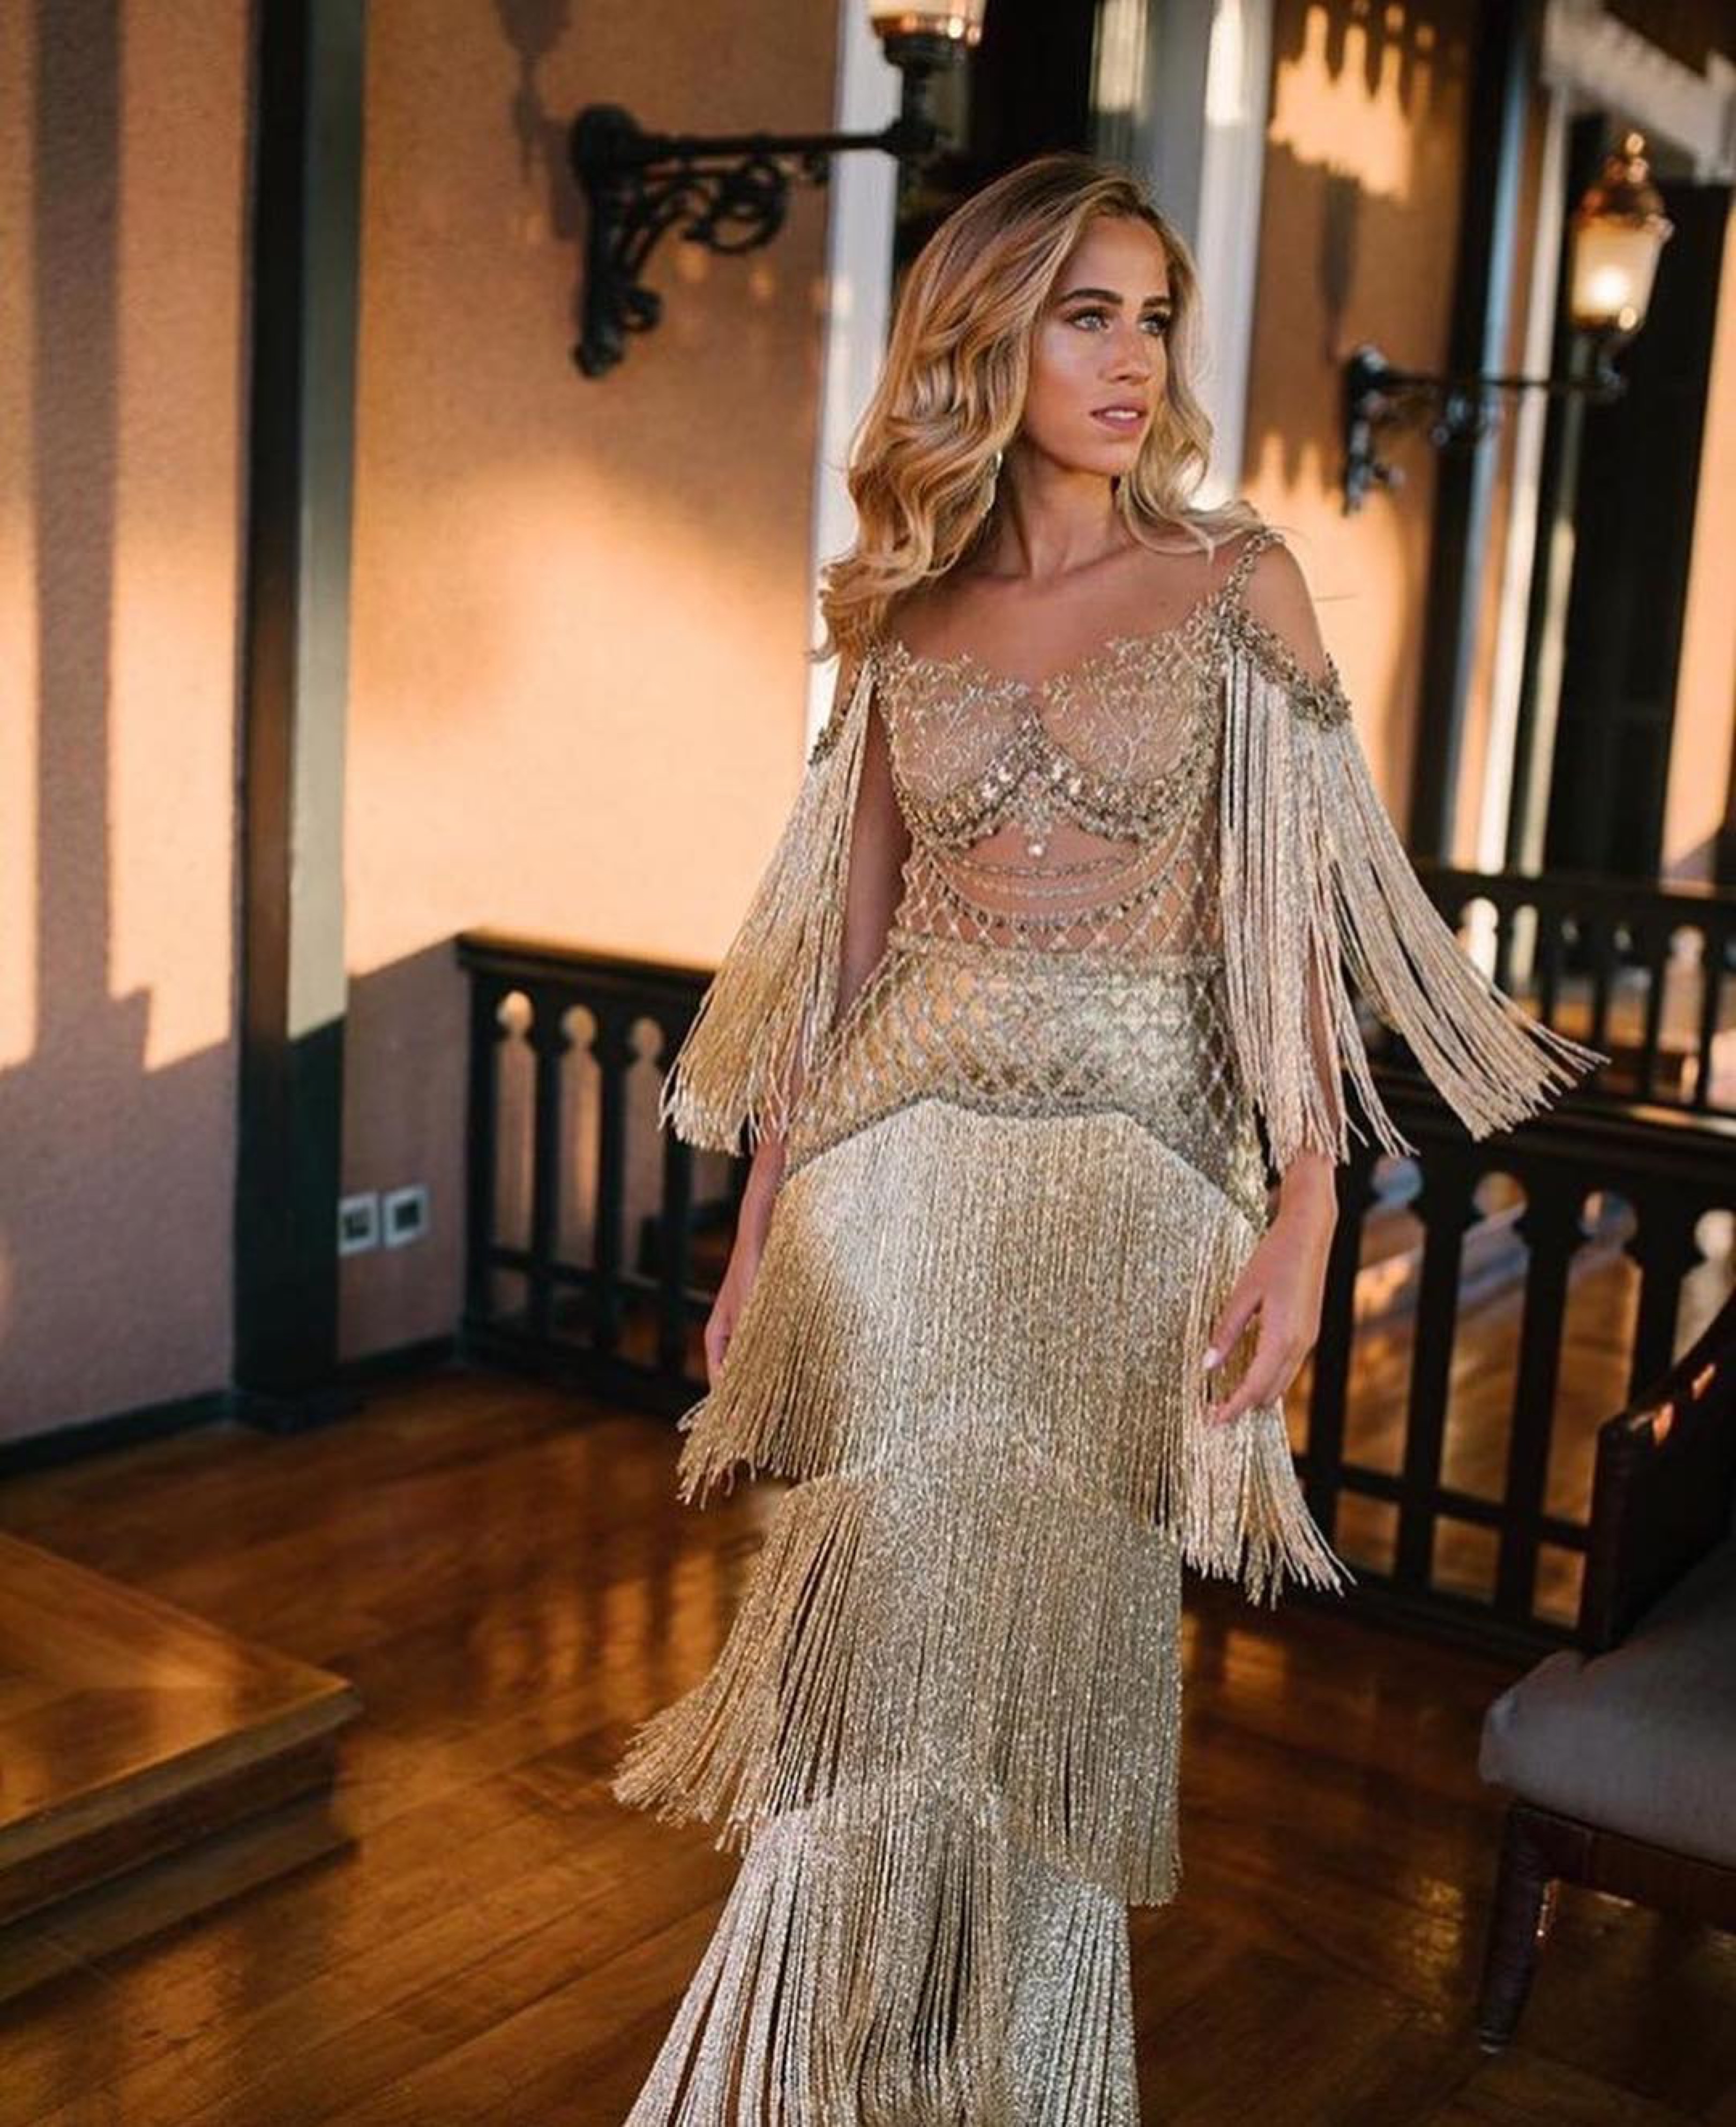 Extremely luxurious gold high fashion dress | Slaylebrity